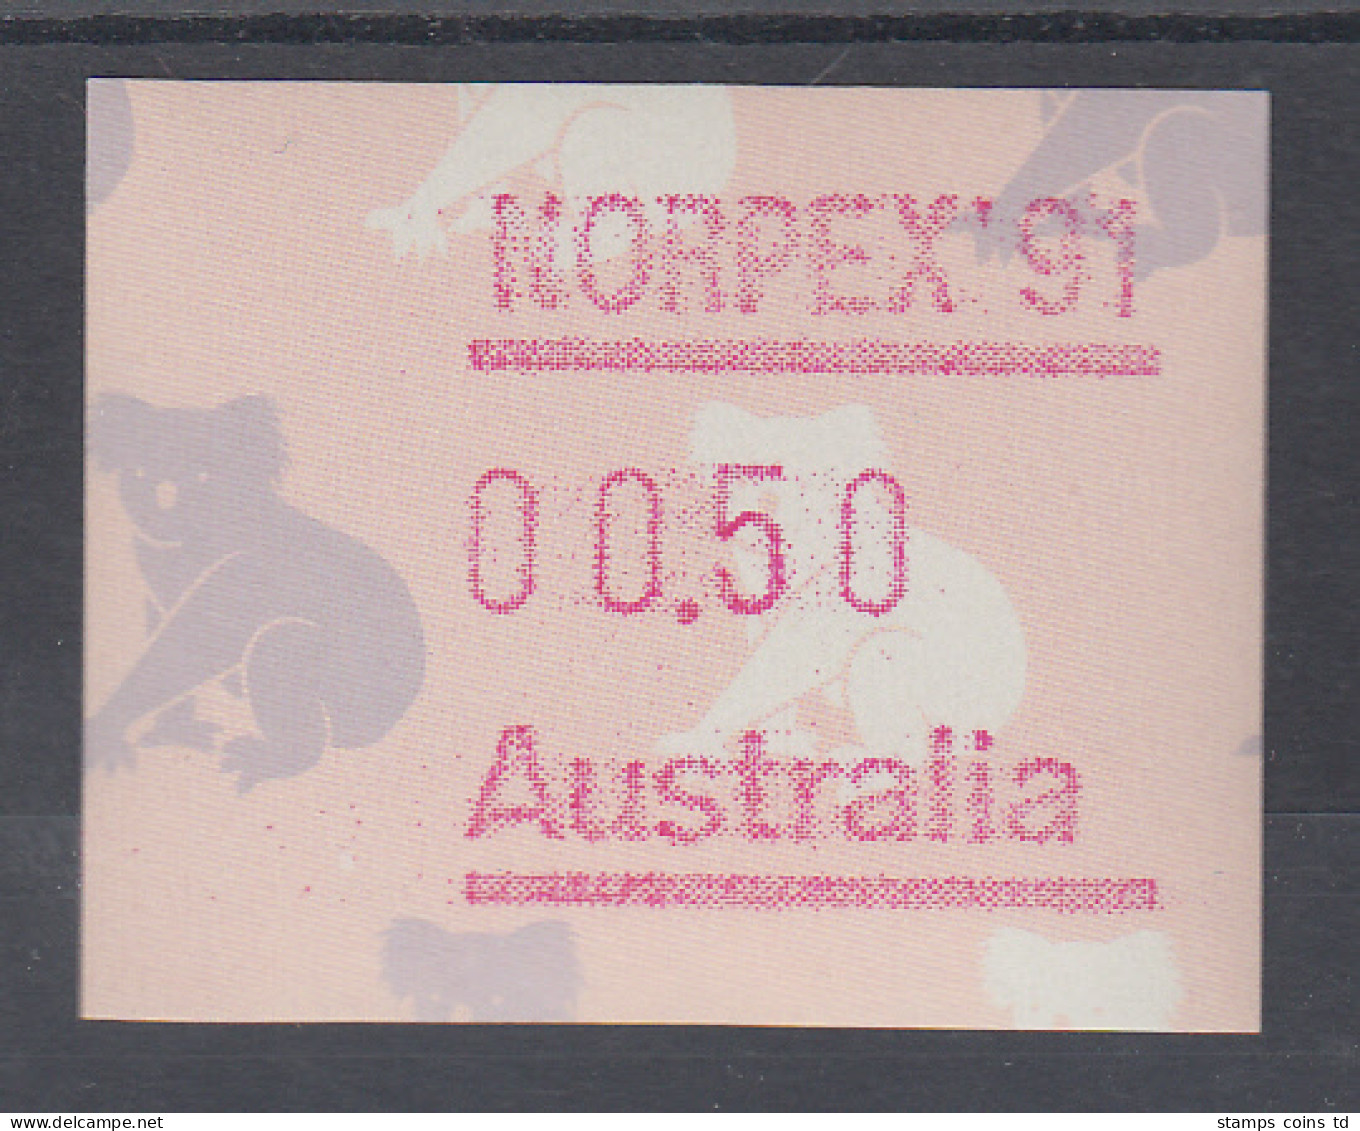 Australien Frama-ATM Koala, Sonderausgabe NORPEX `91 ** - Vignette [ATM]